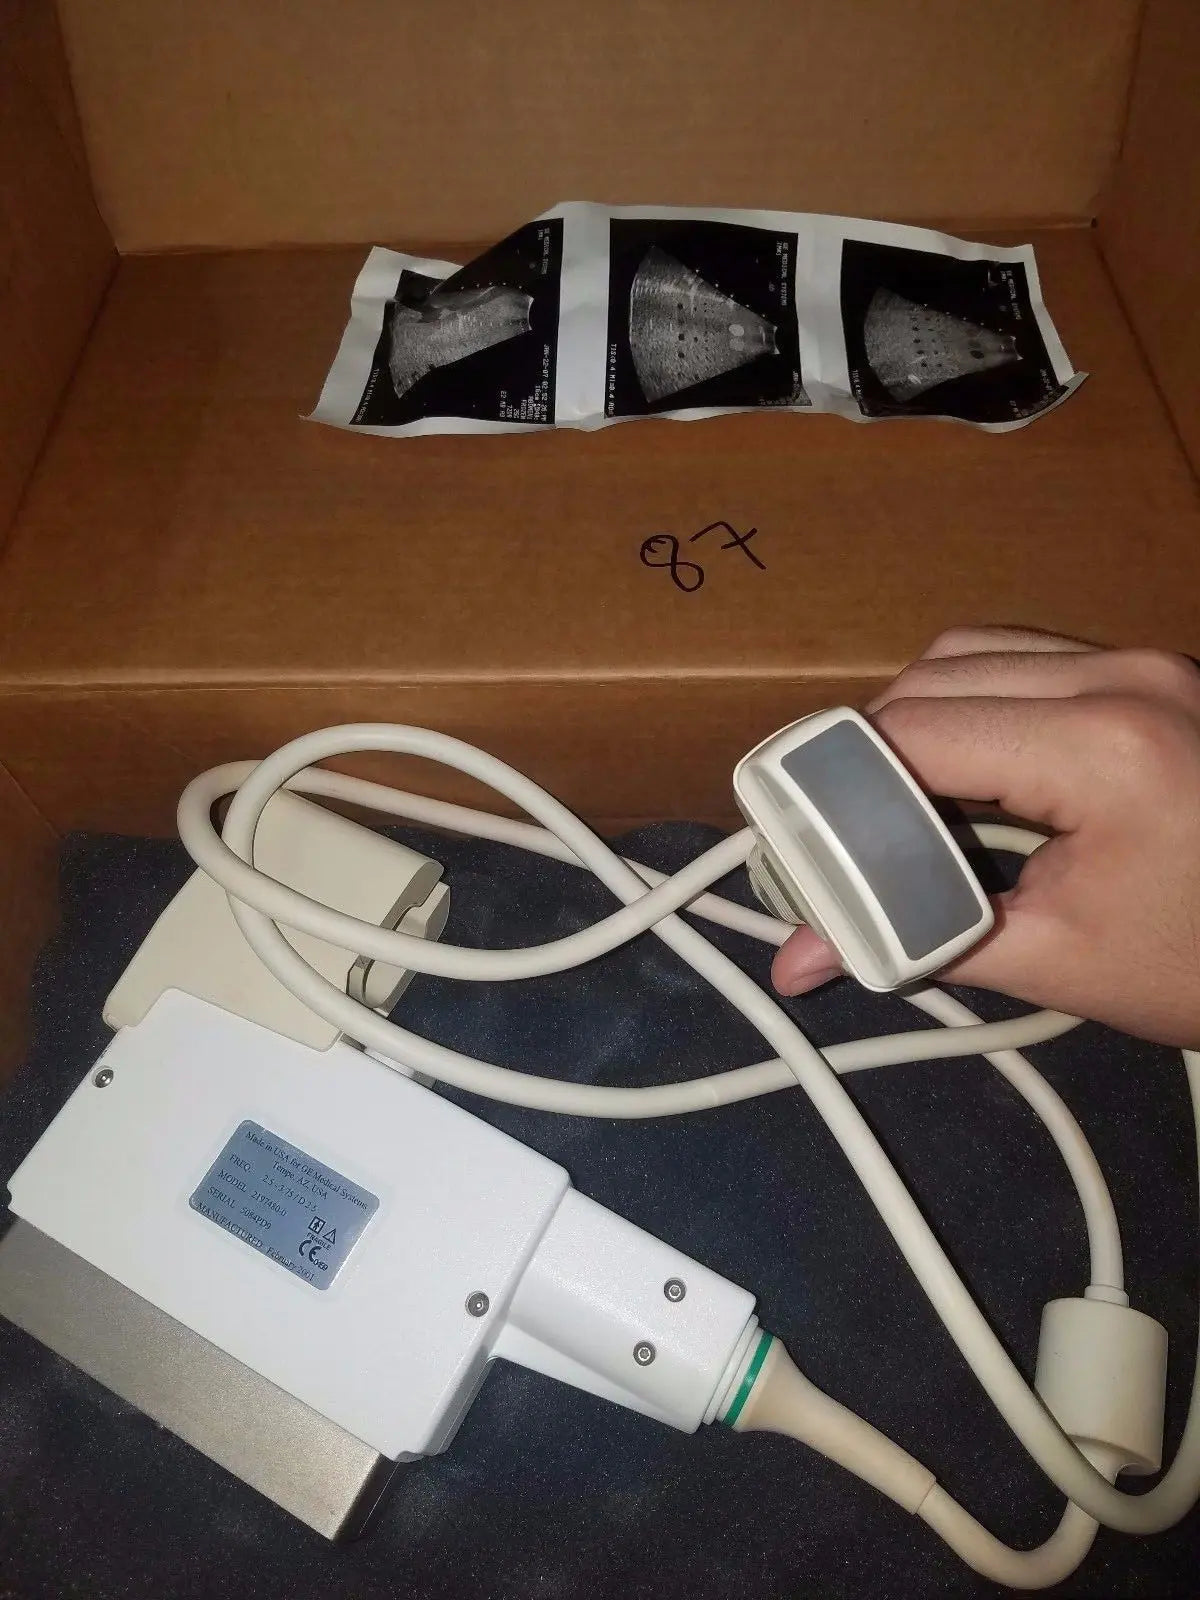 GE 348C Ultrasound Transducer Ultrasound Probe UNTESTED DIAGNOSTIC ULTRASOUND MACHINES FOR SALE